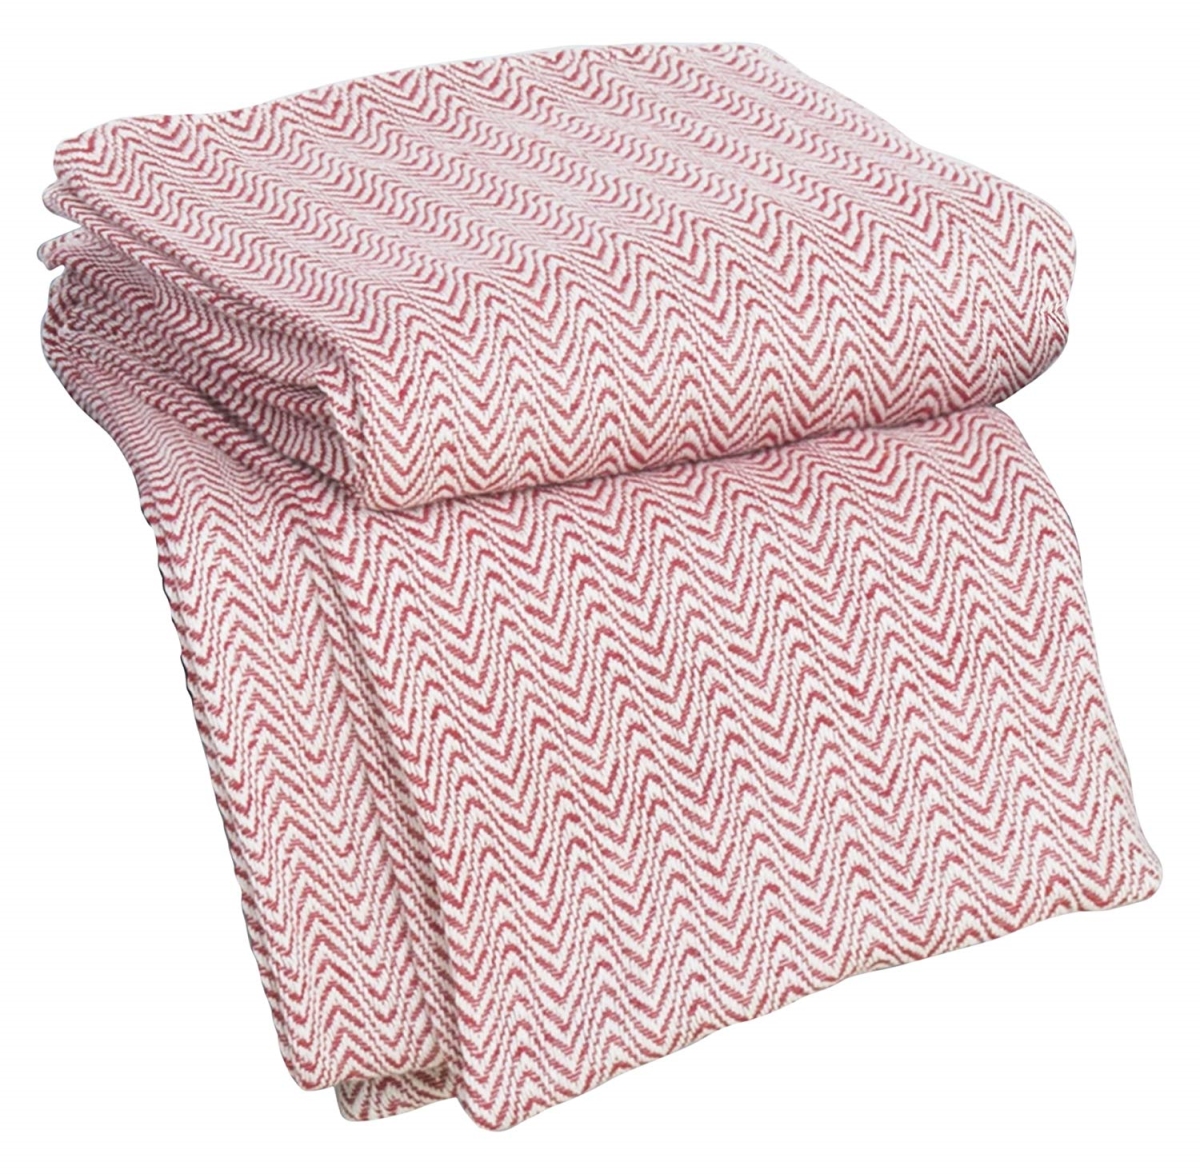 61a-26554 Chevron 100 Percent Egyptian Cotton Blanket - Twin Size - Brick